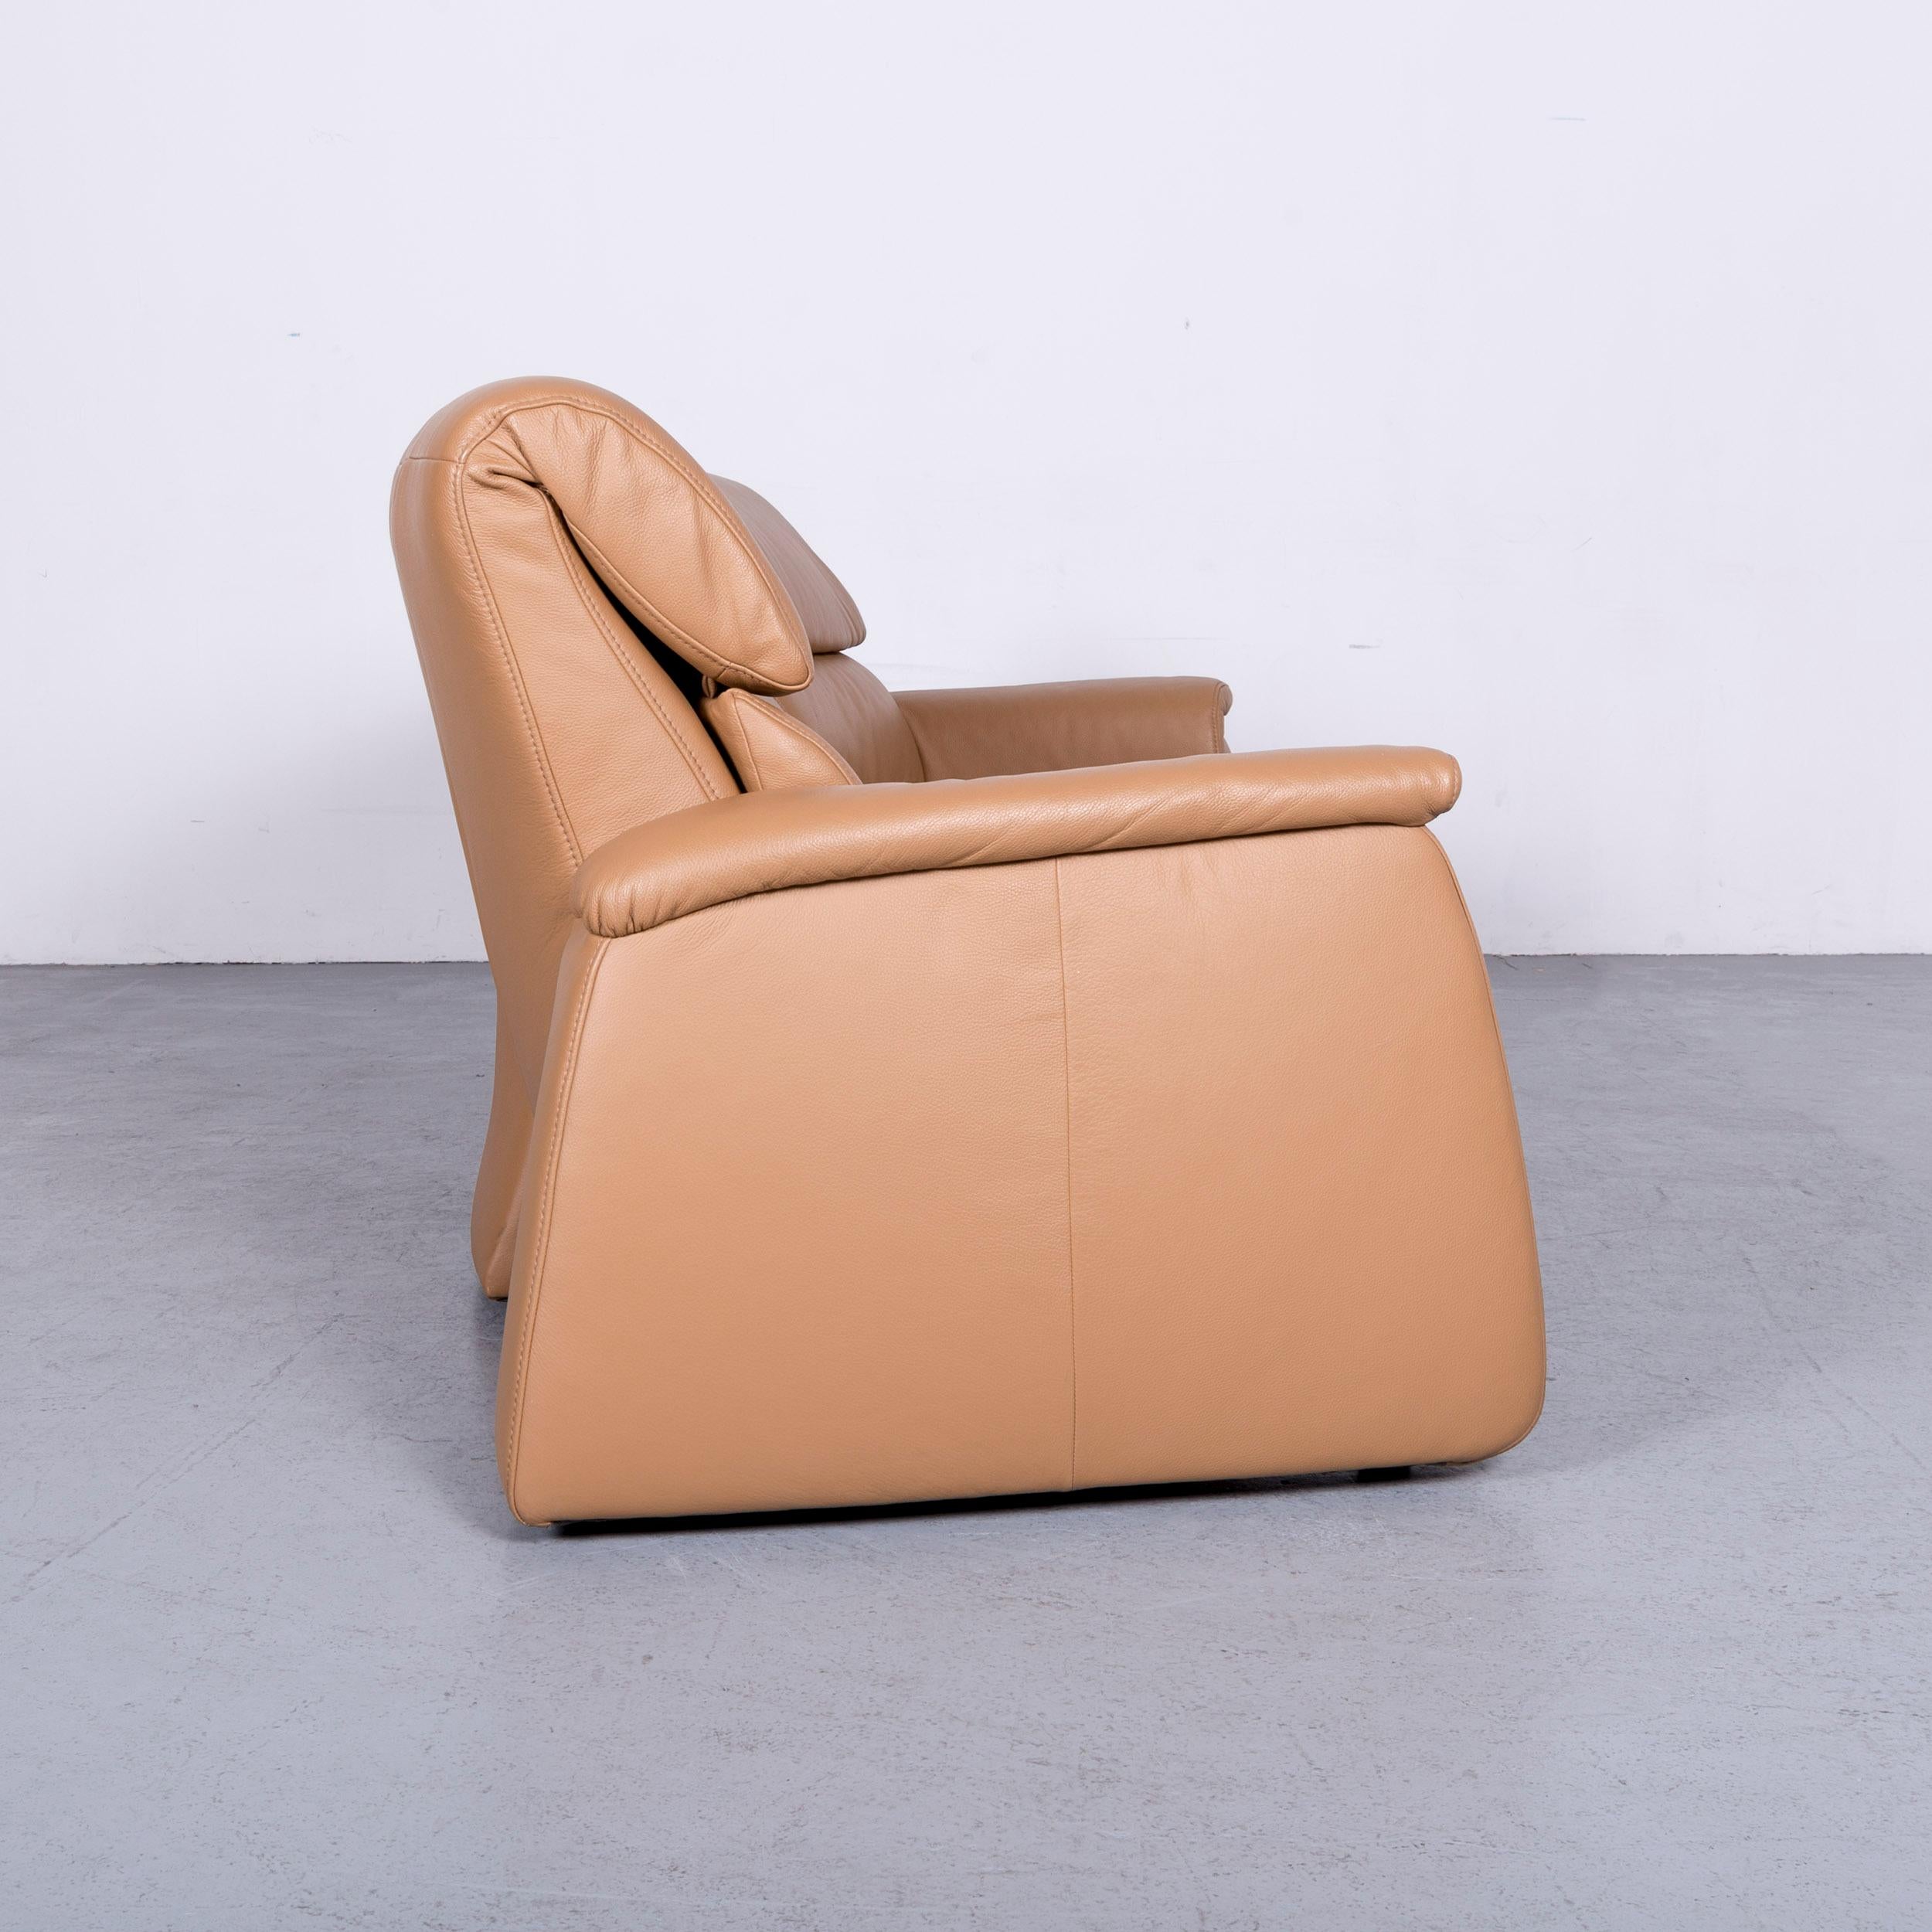 Himolla Designer Sofa Beige Three-Seat Couch Recliner Function 6